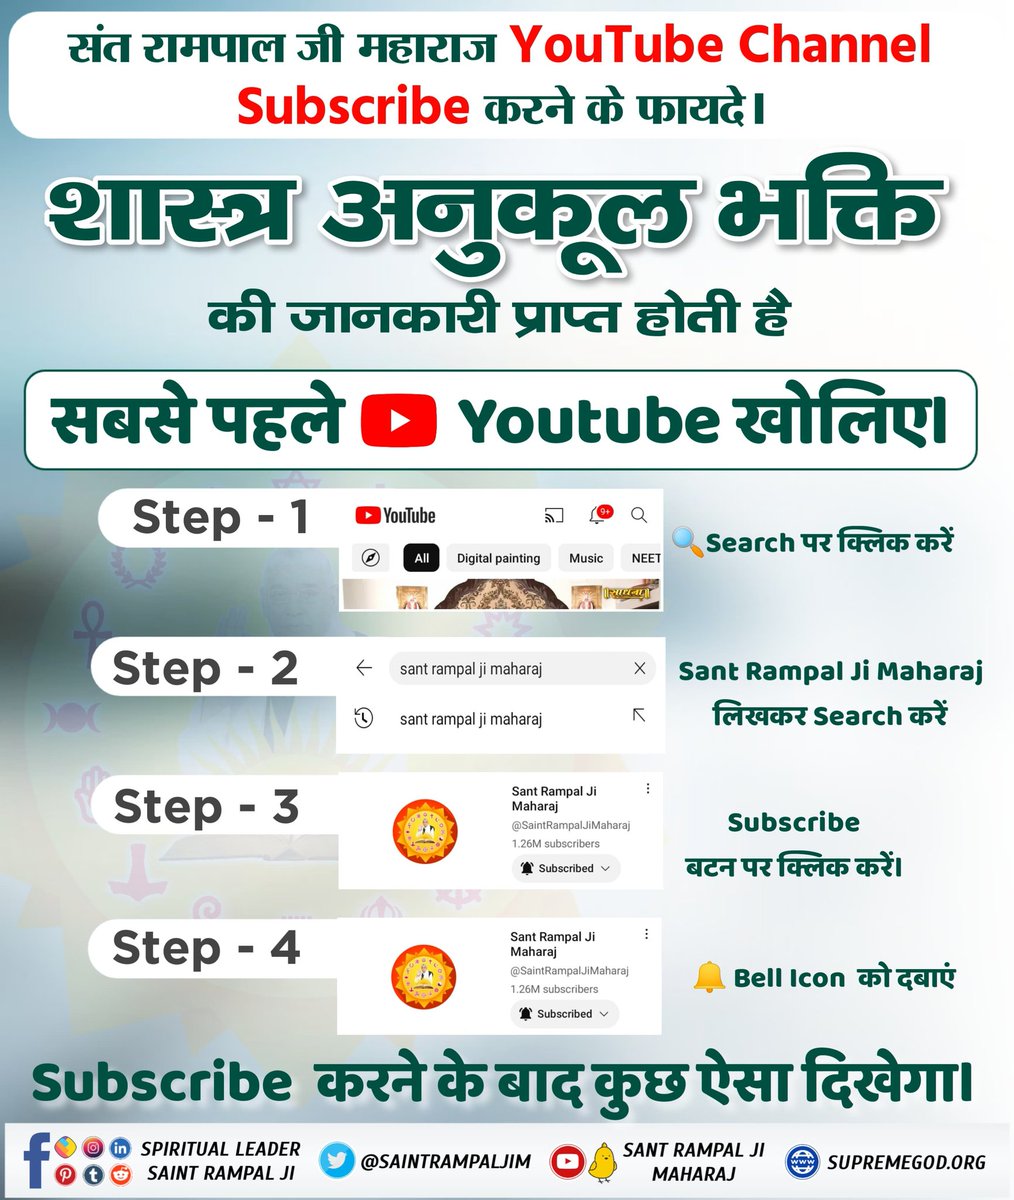 #सुनो_गीता_अमृत_ज्ञान For more information please subscribe youtu.be channel 'Sant Rampal Ji Maharaj '⬇️⬇️⬇️